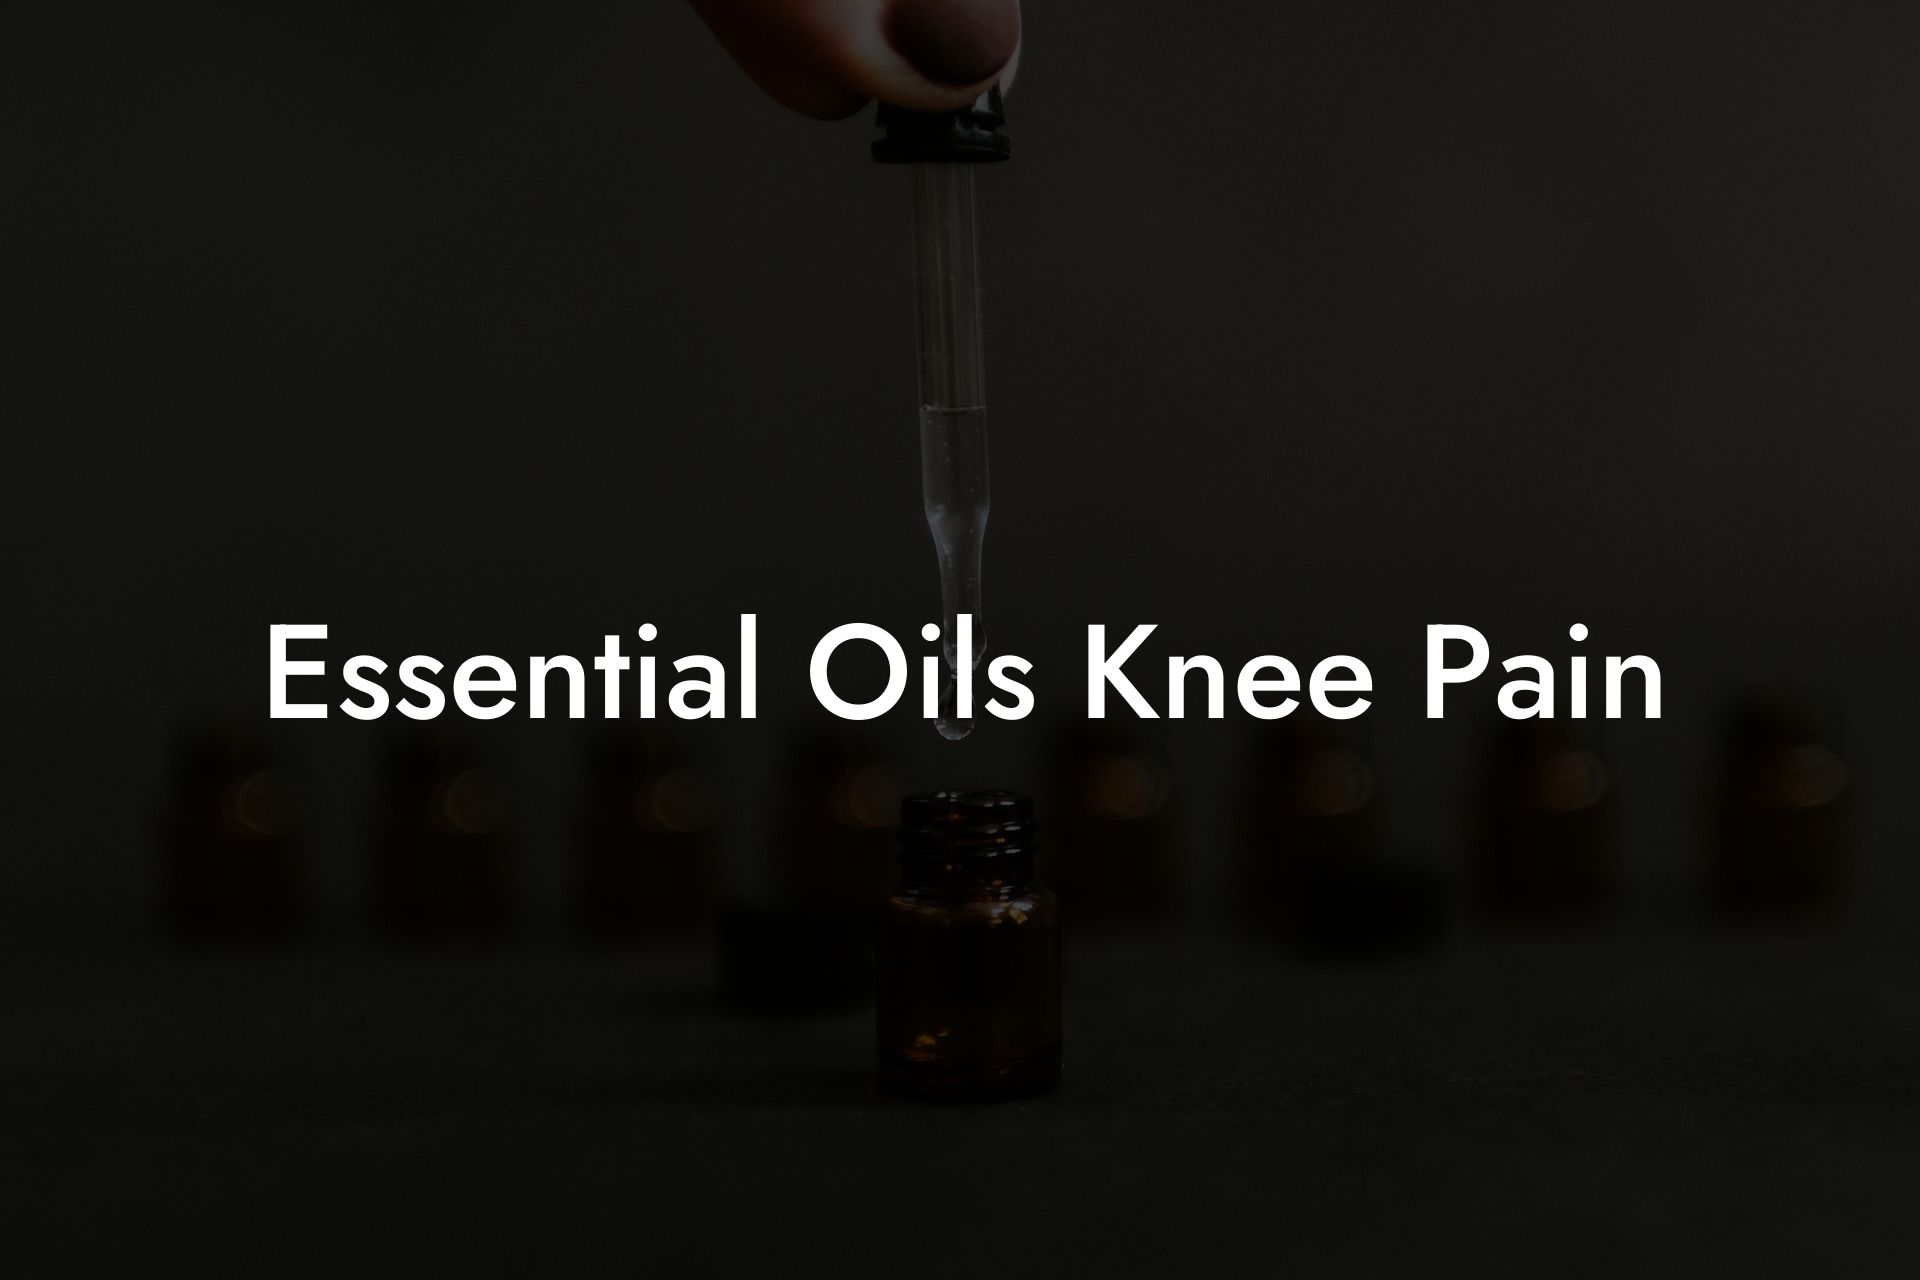 Essential Oils Knee Pain